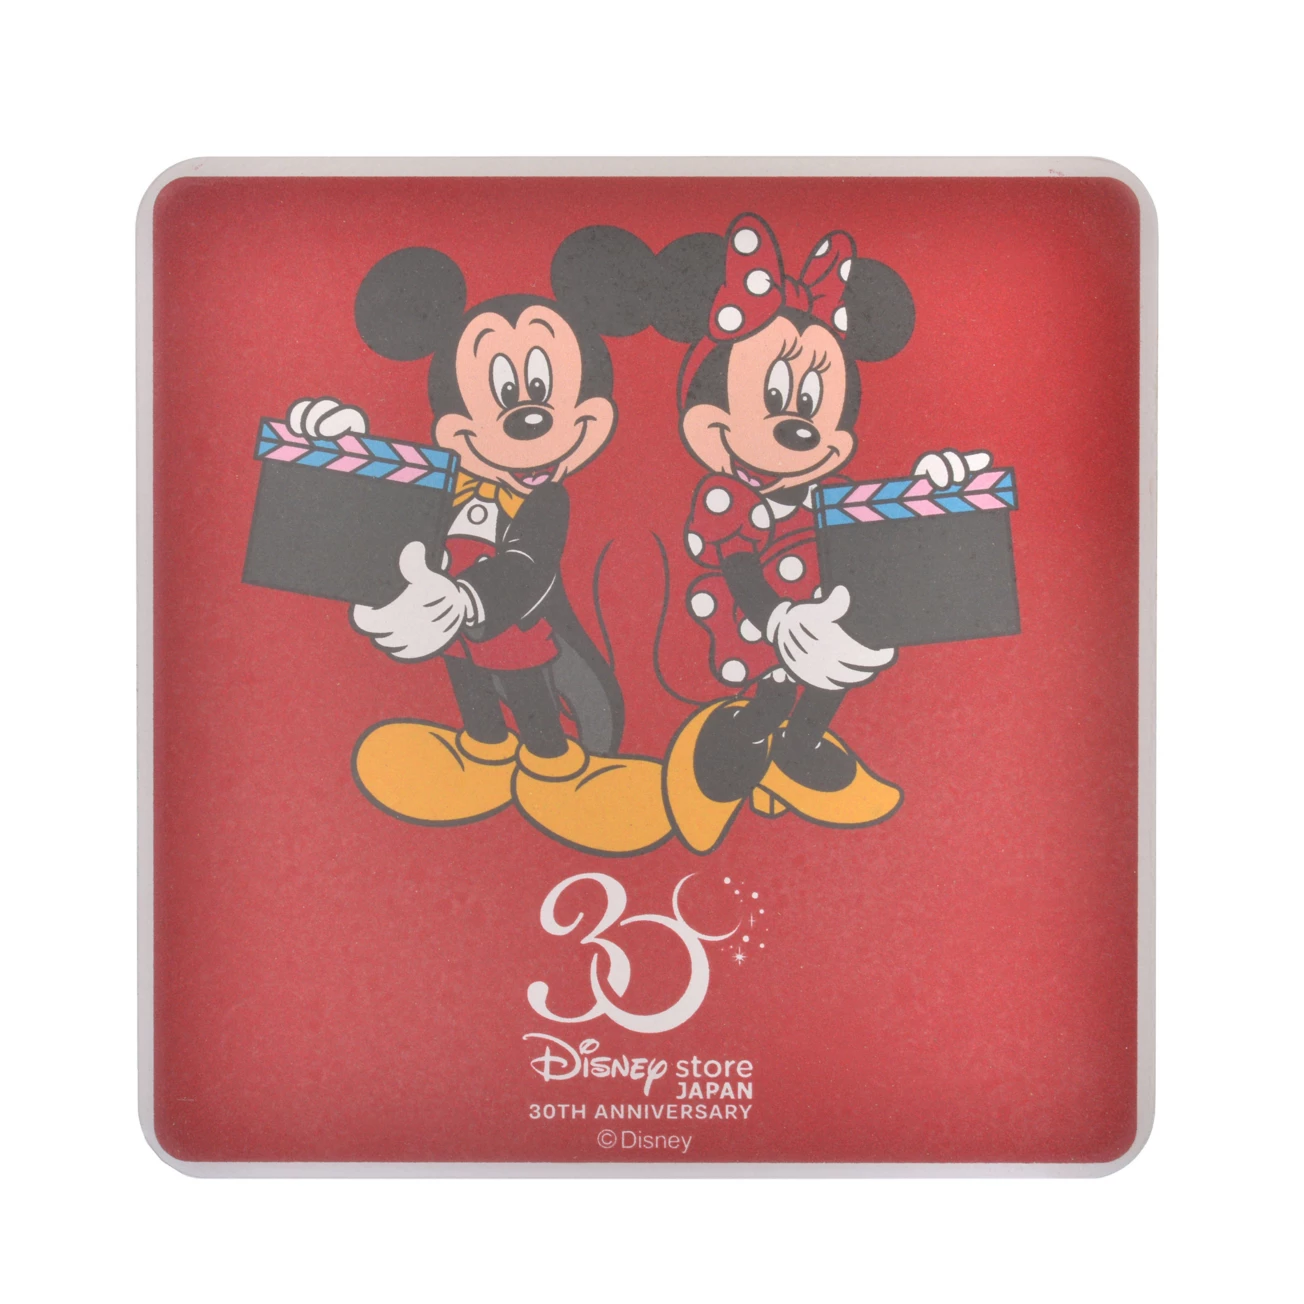 SDJ - Disney Store Japan 30TH Anniversary - Coaster